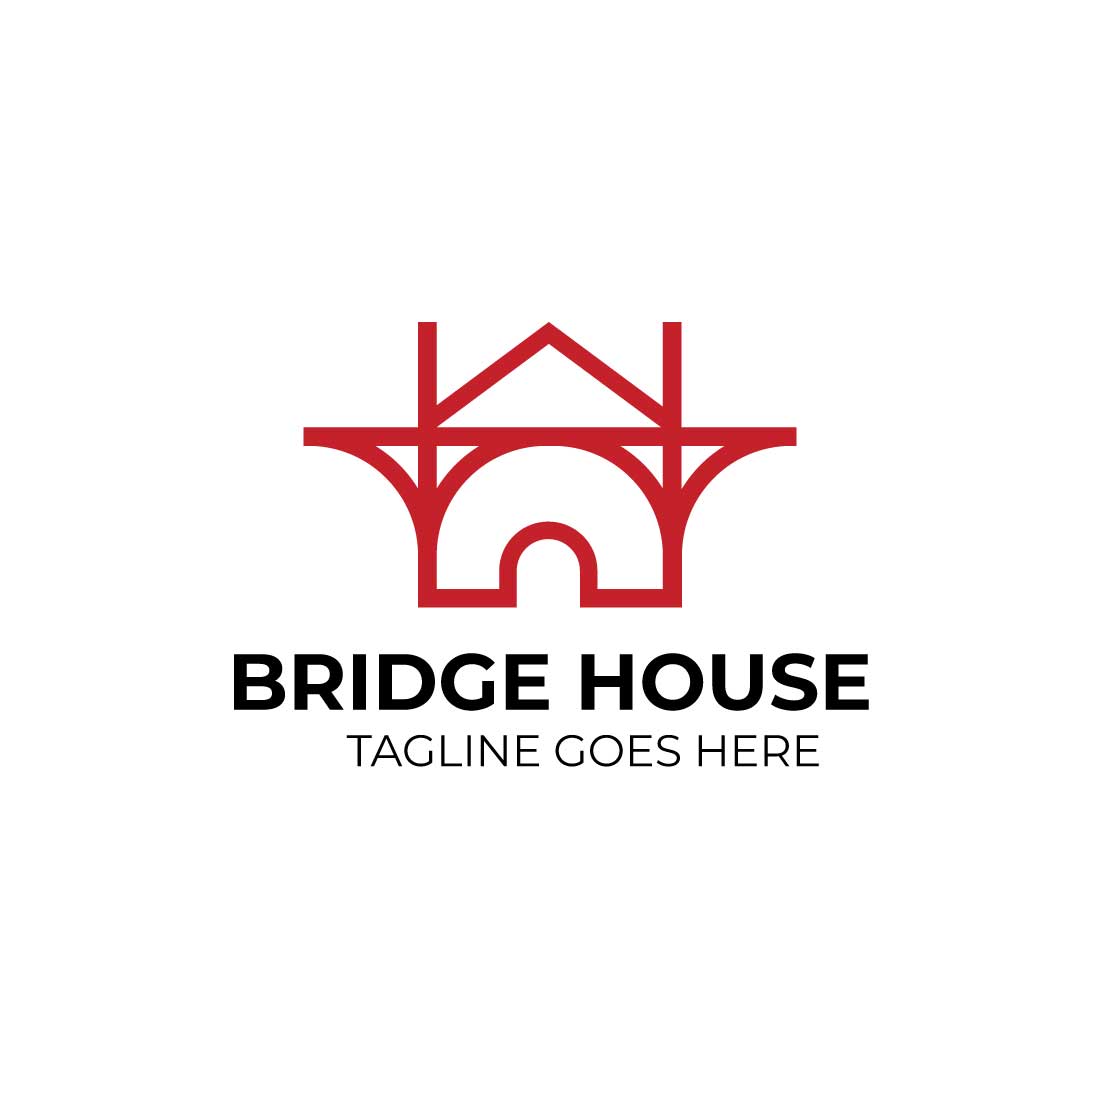 Professional Bridge House Logo design preview image.